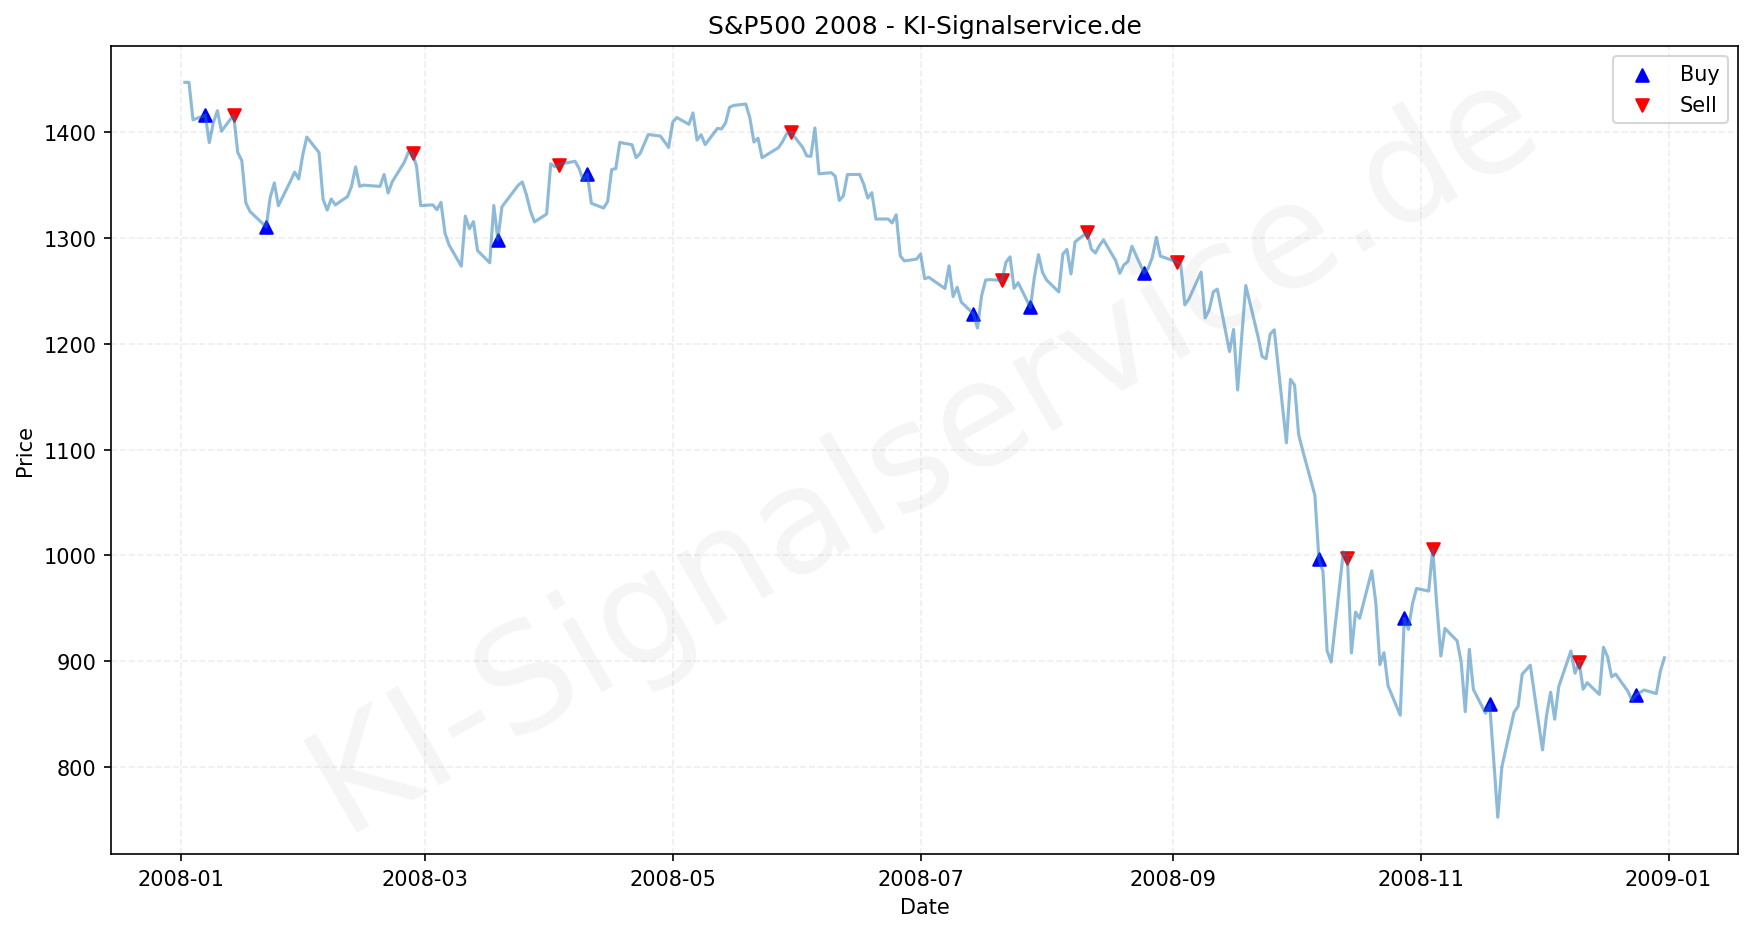 SP500 Index Performance Chart - KI Tradingsignale 2008